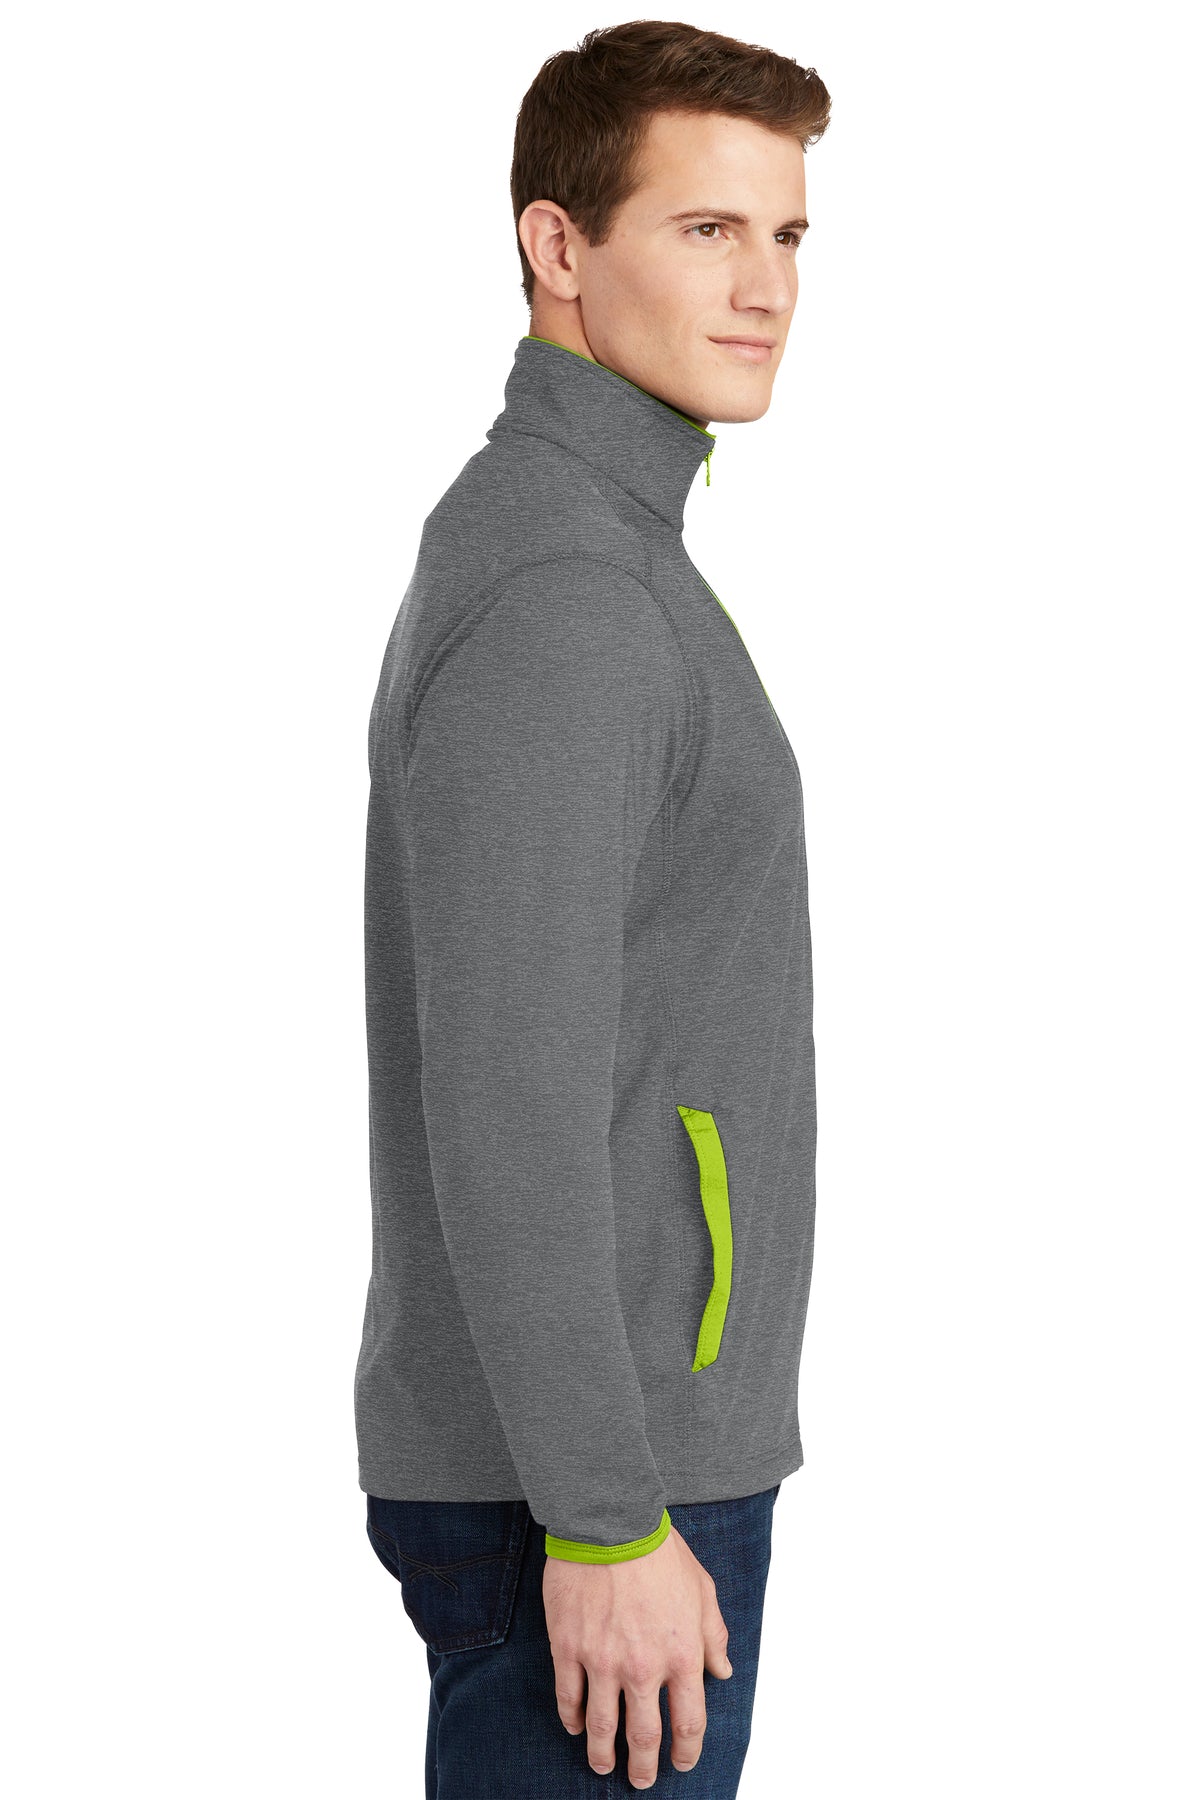 sport-tek_st853 _charcoal grey heather/ charge green_company_logo_sweatshirts